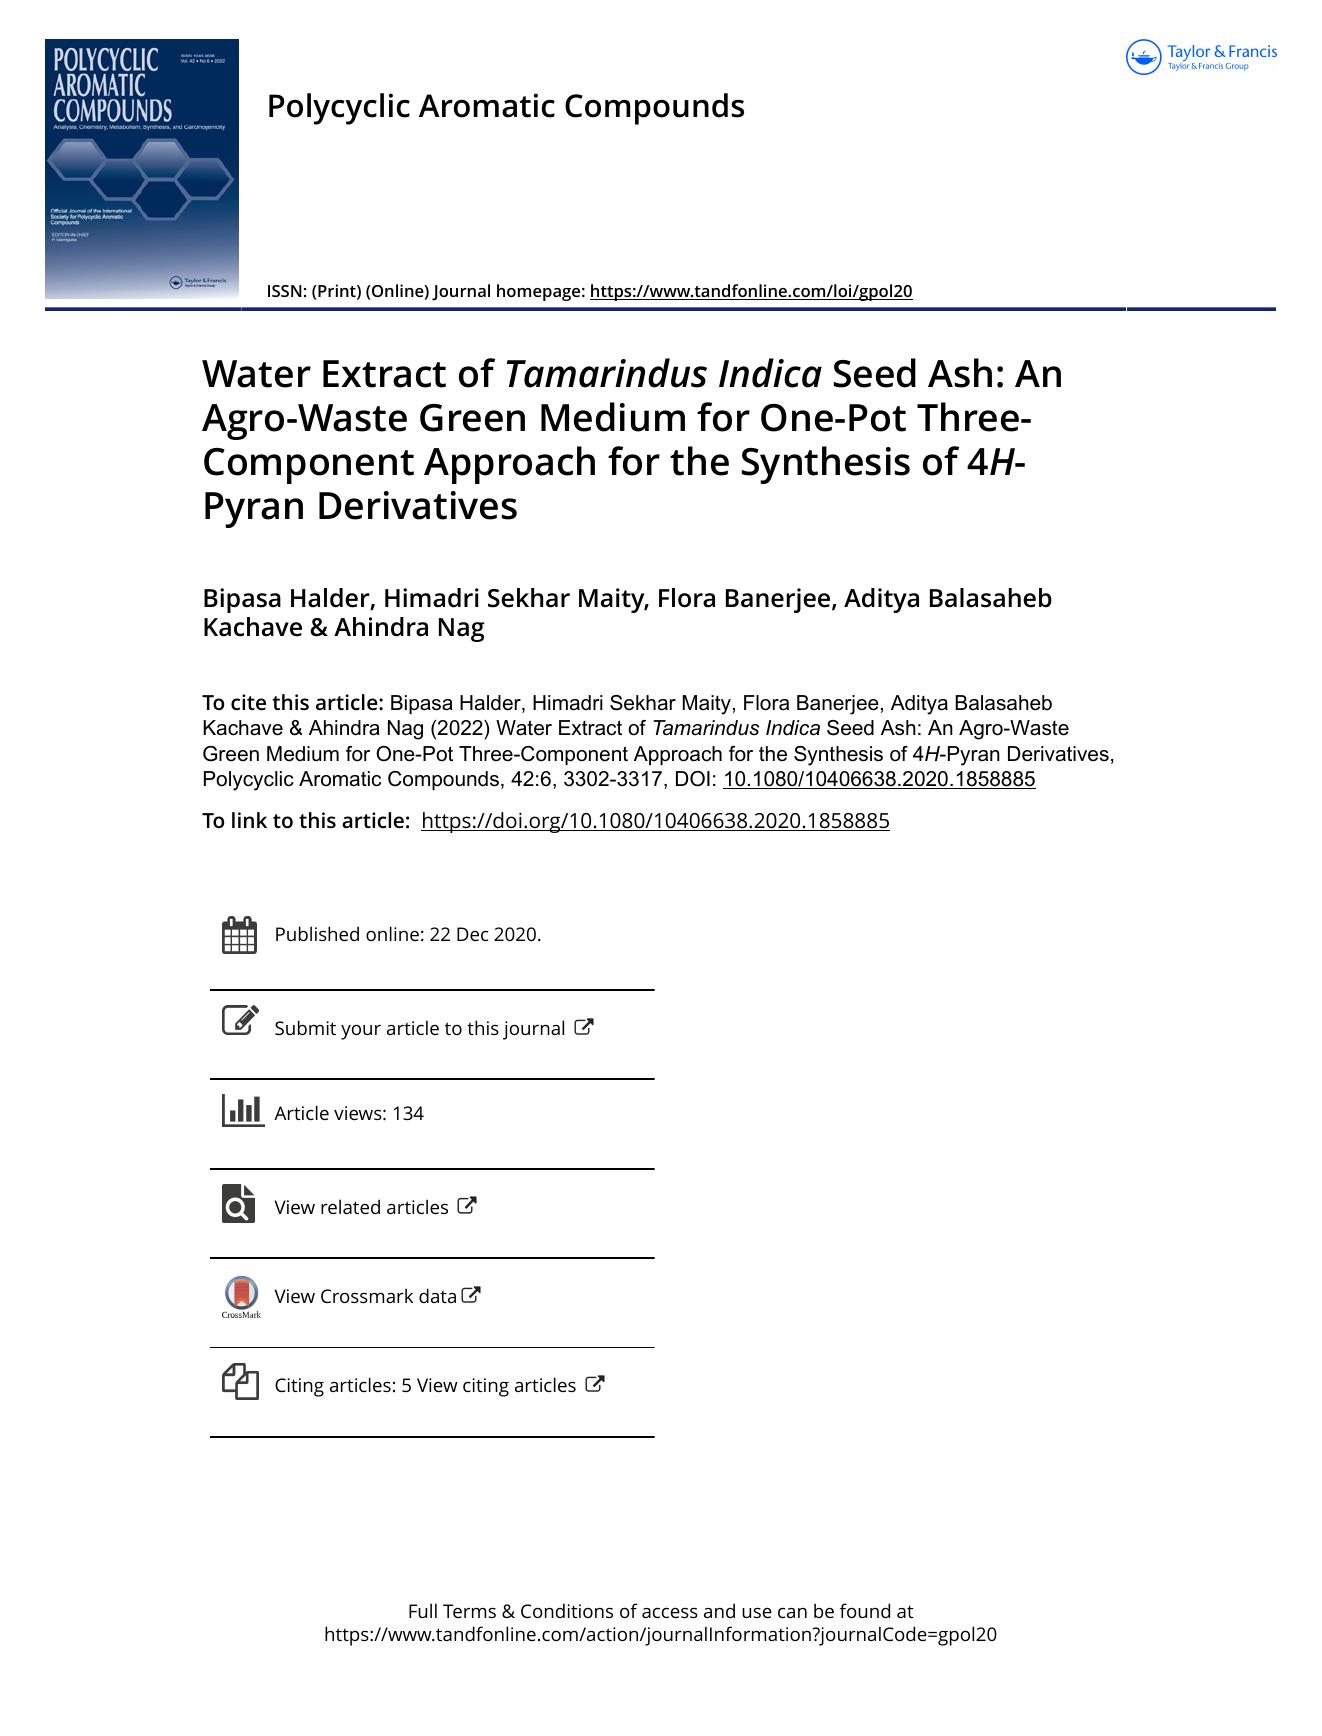 Water Extract of Tamarindus Indica Seed Ash: An Agro-Waste Green Medium for One-Pot Three-Component Approach for the Synthesis of 4H-Pyran Derivatives by Halder Bipasa & Maity Himadri Sekhar & Banerjee Flora & Kachave Aditya Balasaheb & Nag Ahindra